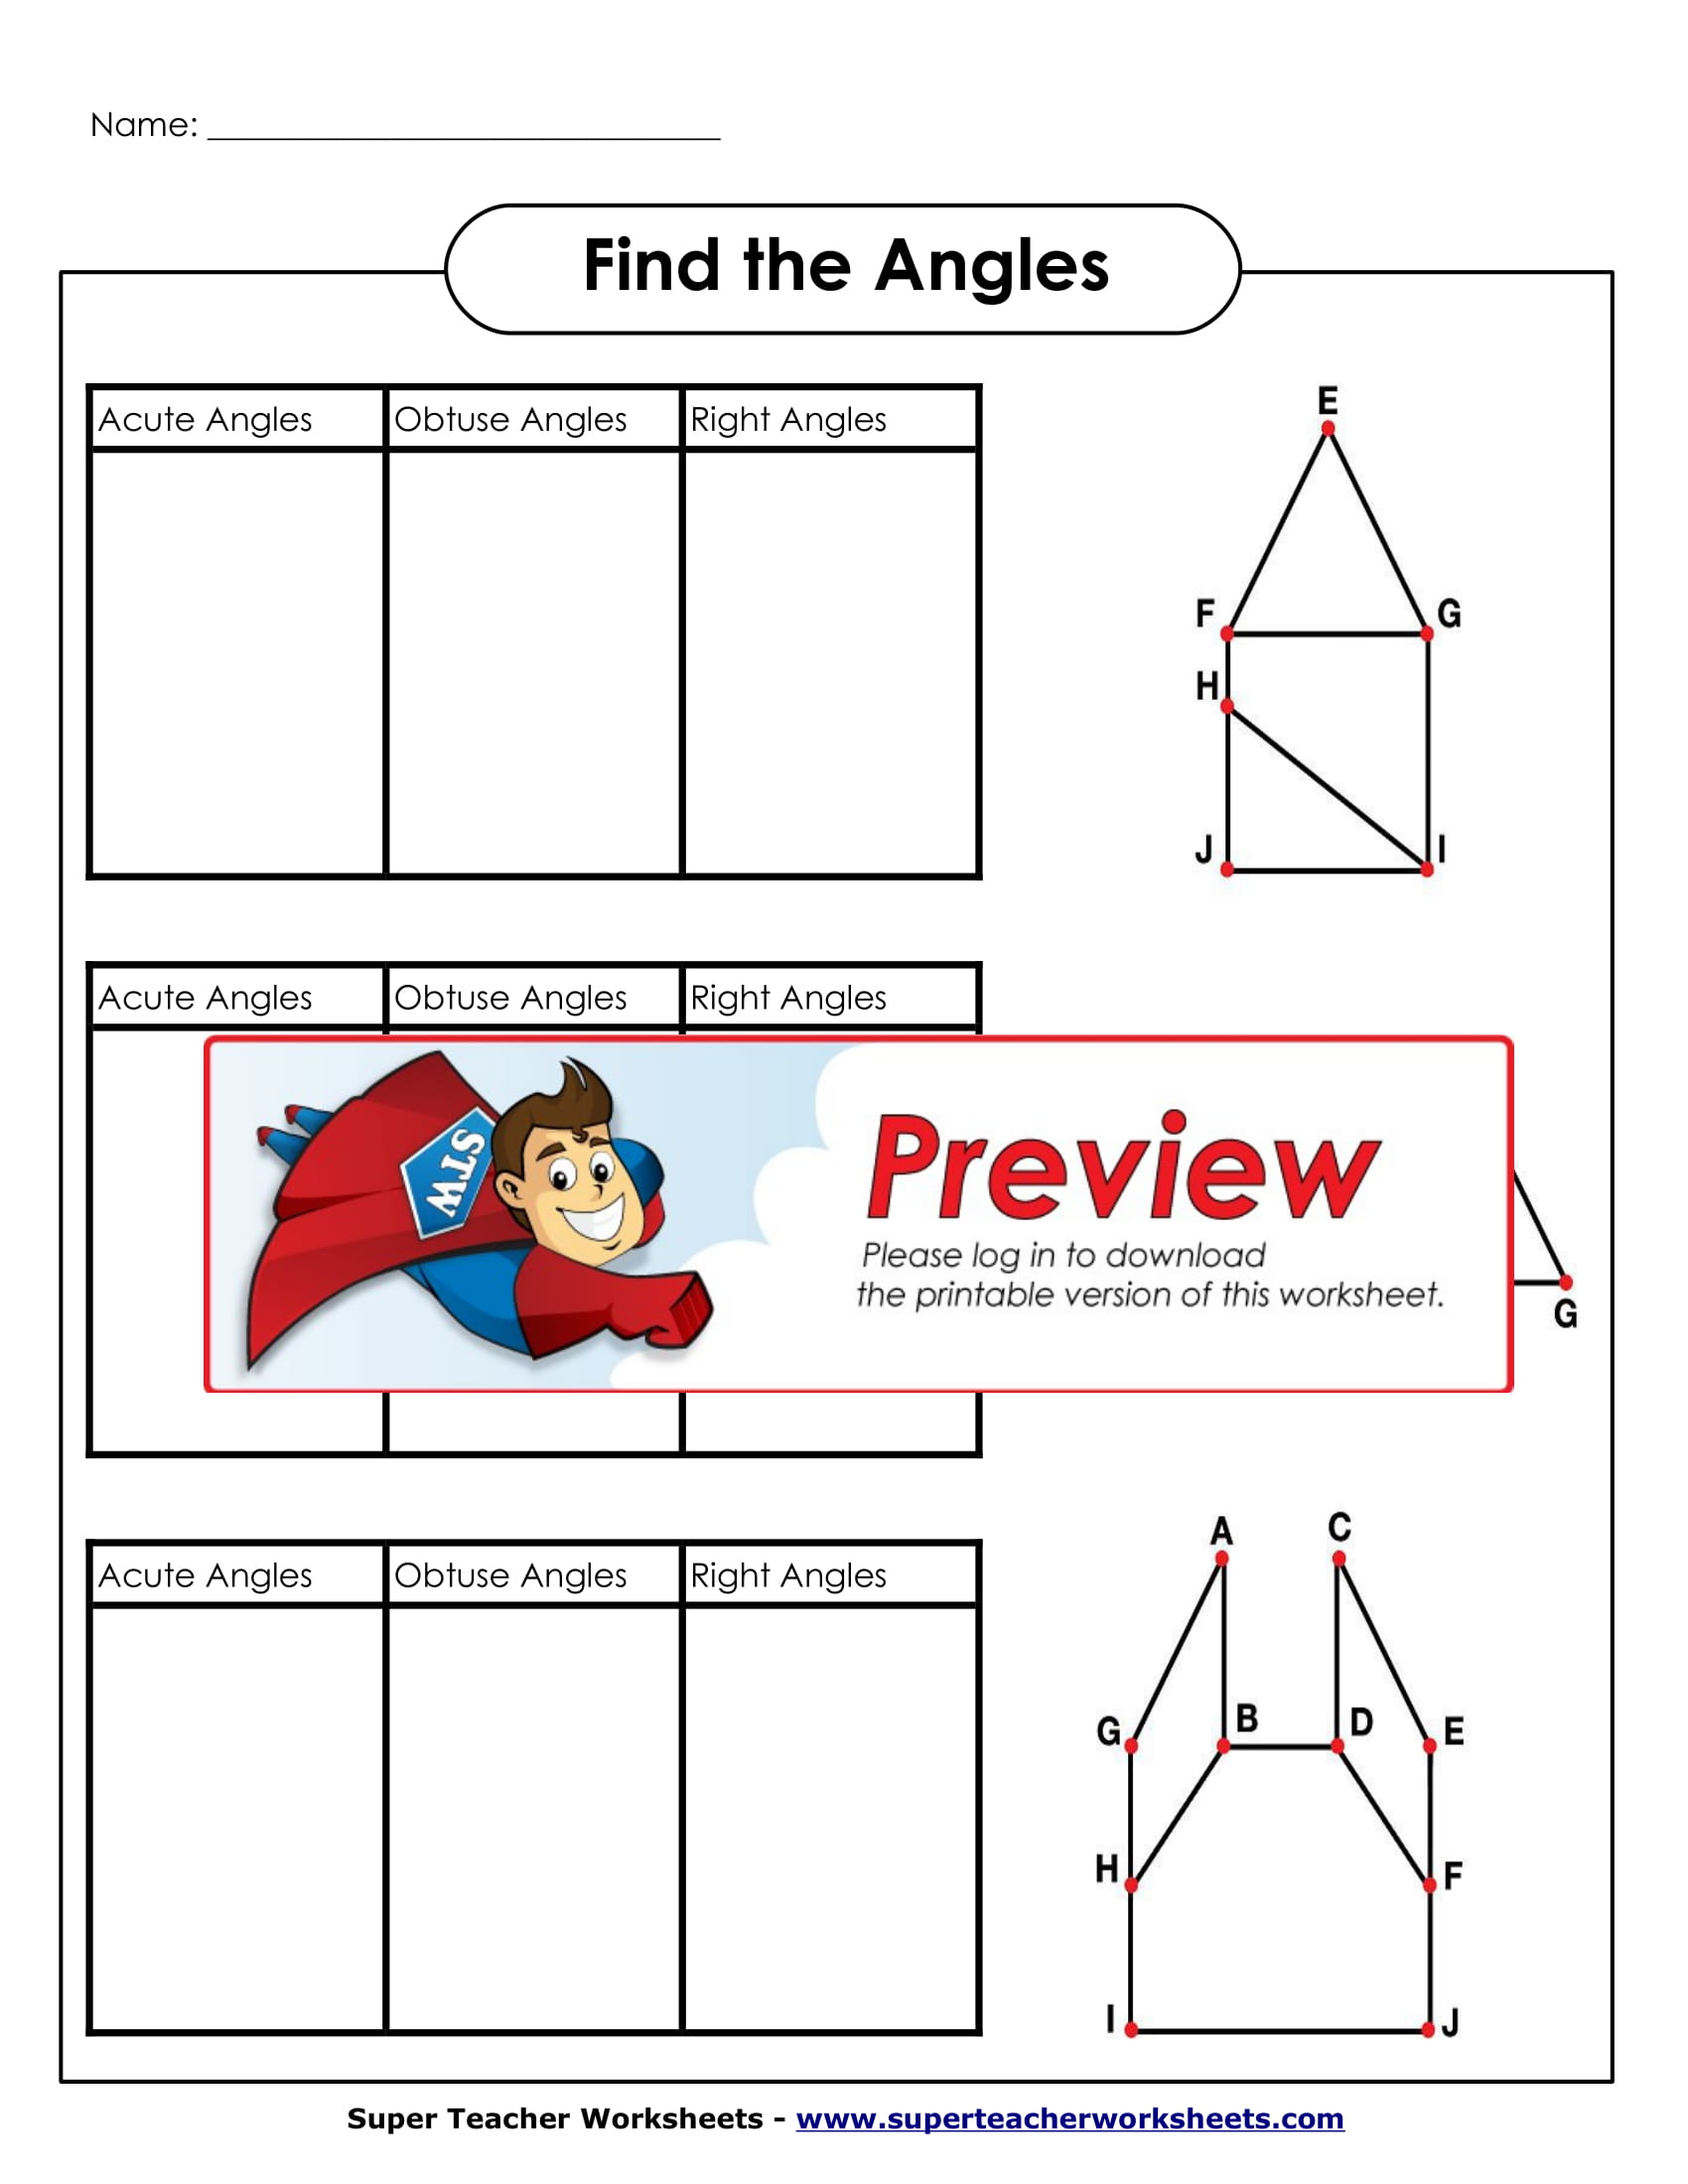 Find the Angles Sample Worksheet